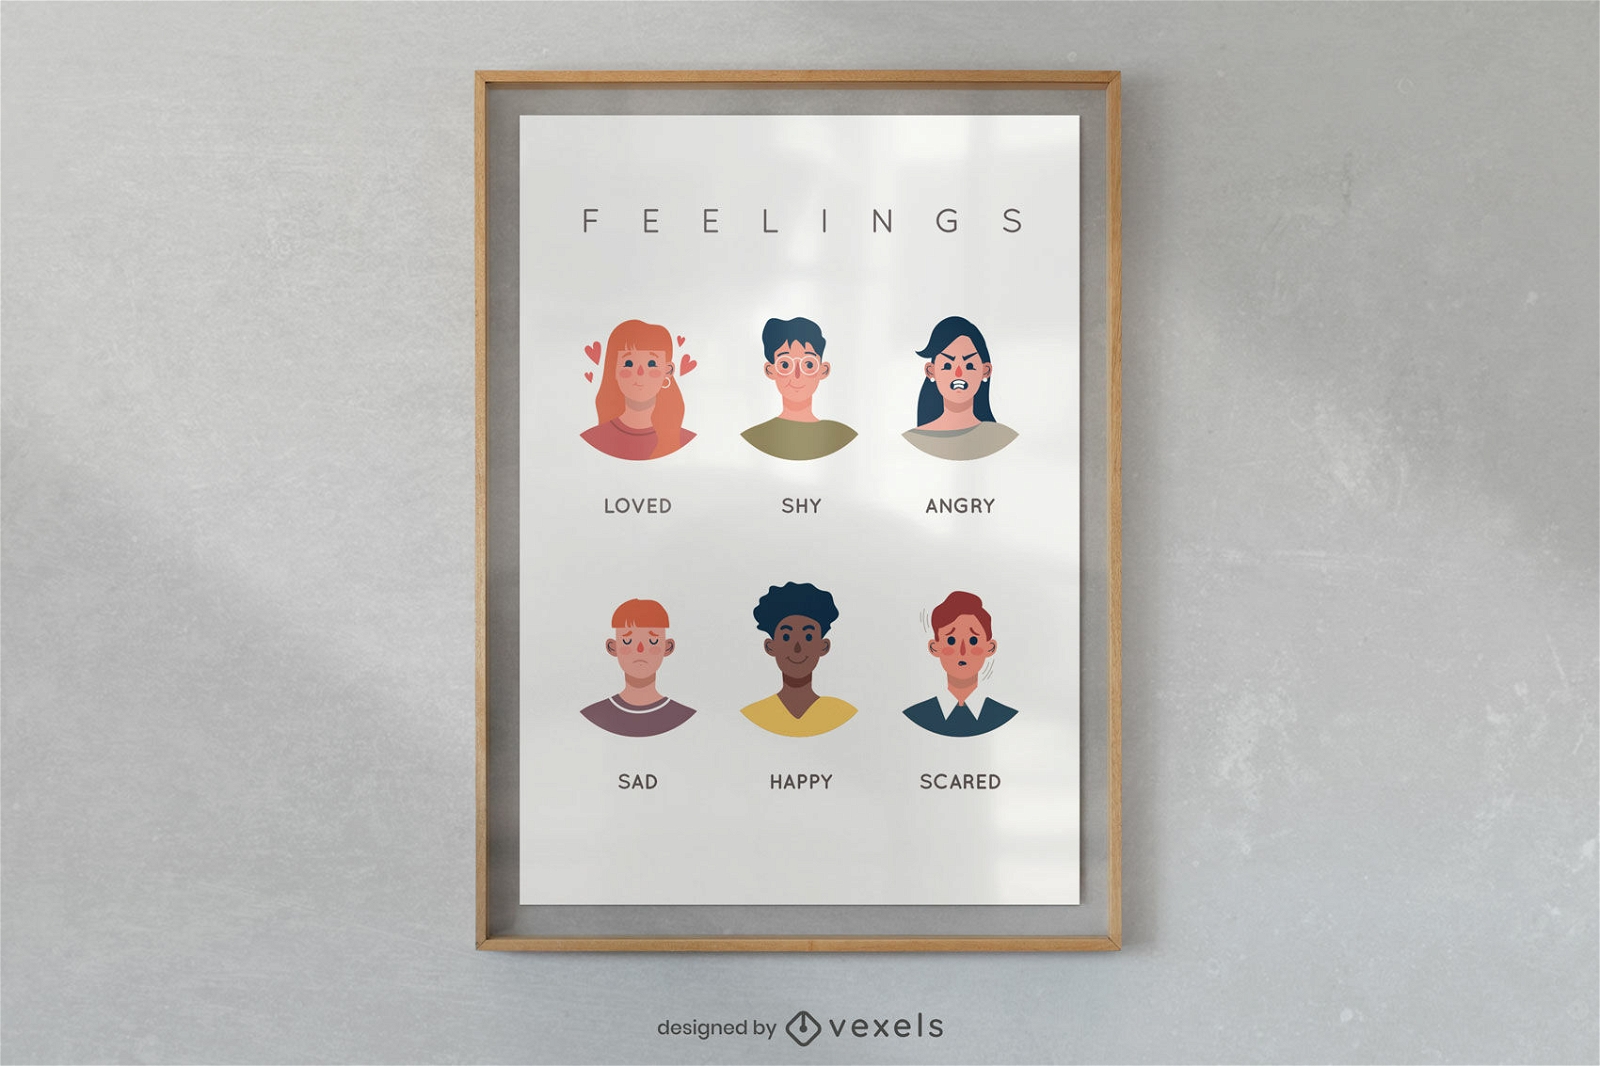 Emotions educational poster design